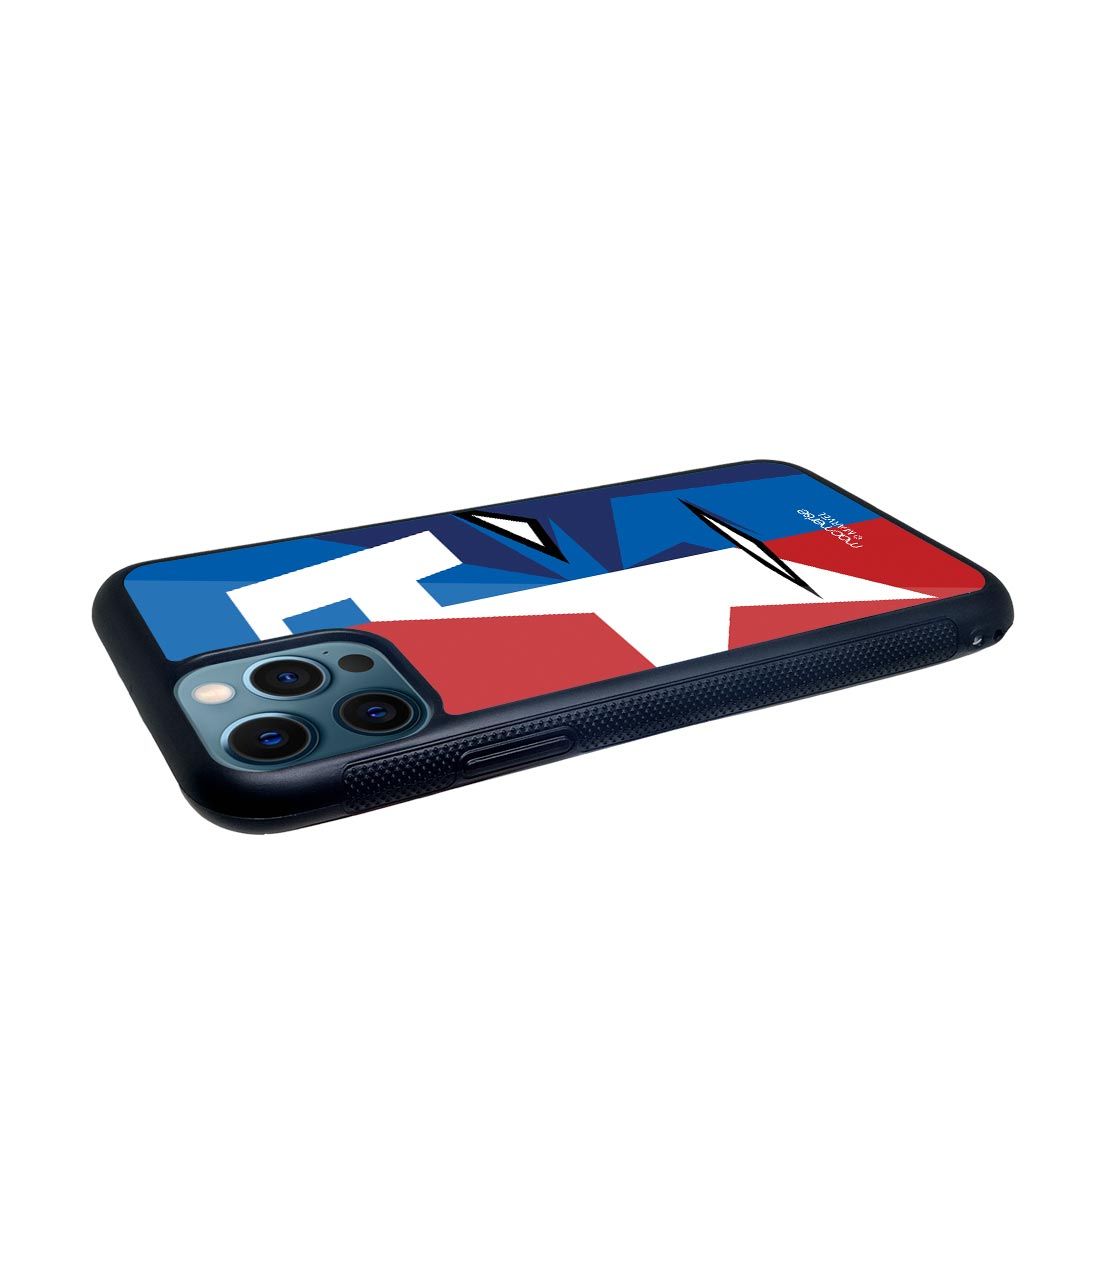 Face Focus Captain America - Glass Case for iPhone 12 Pro Max